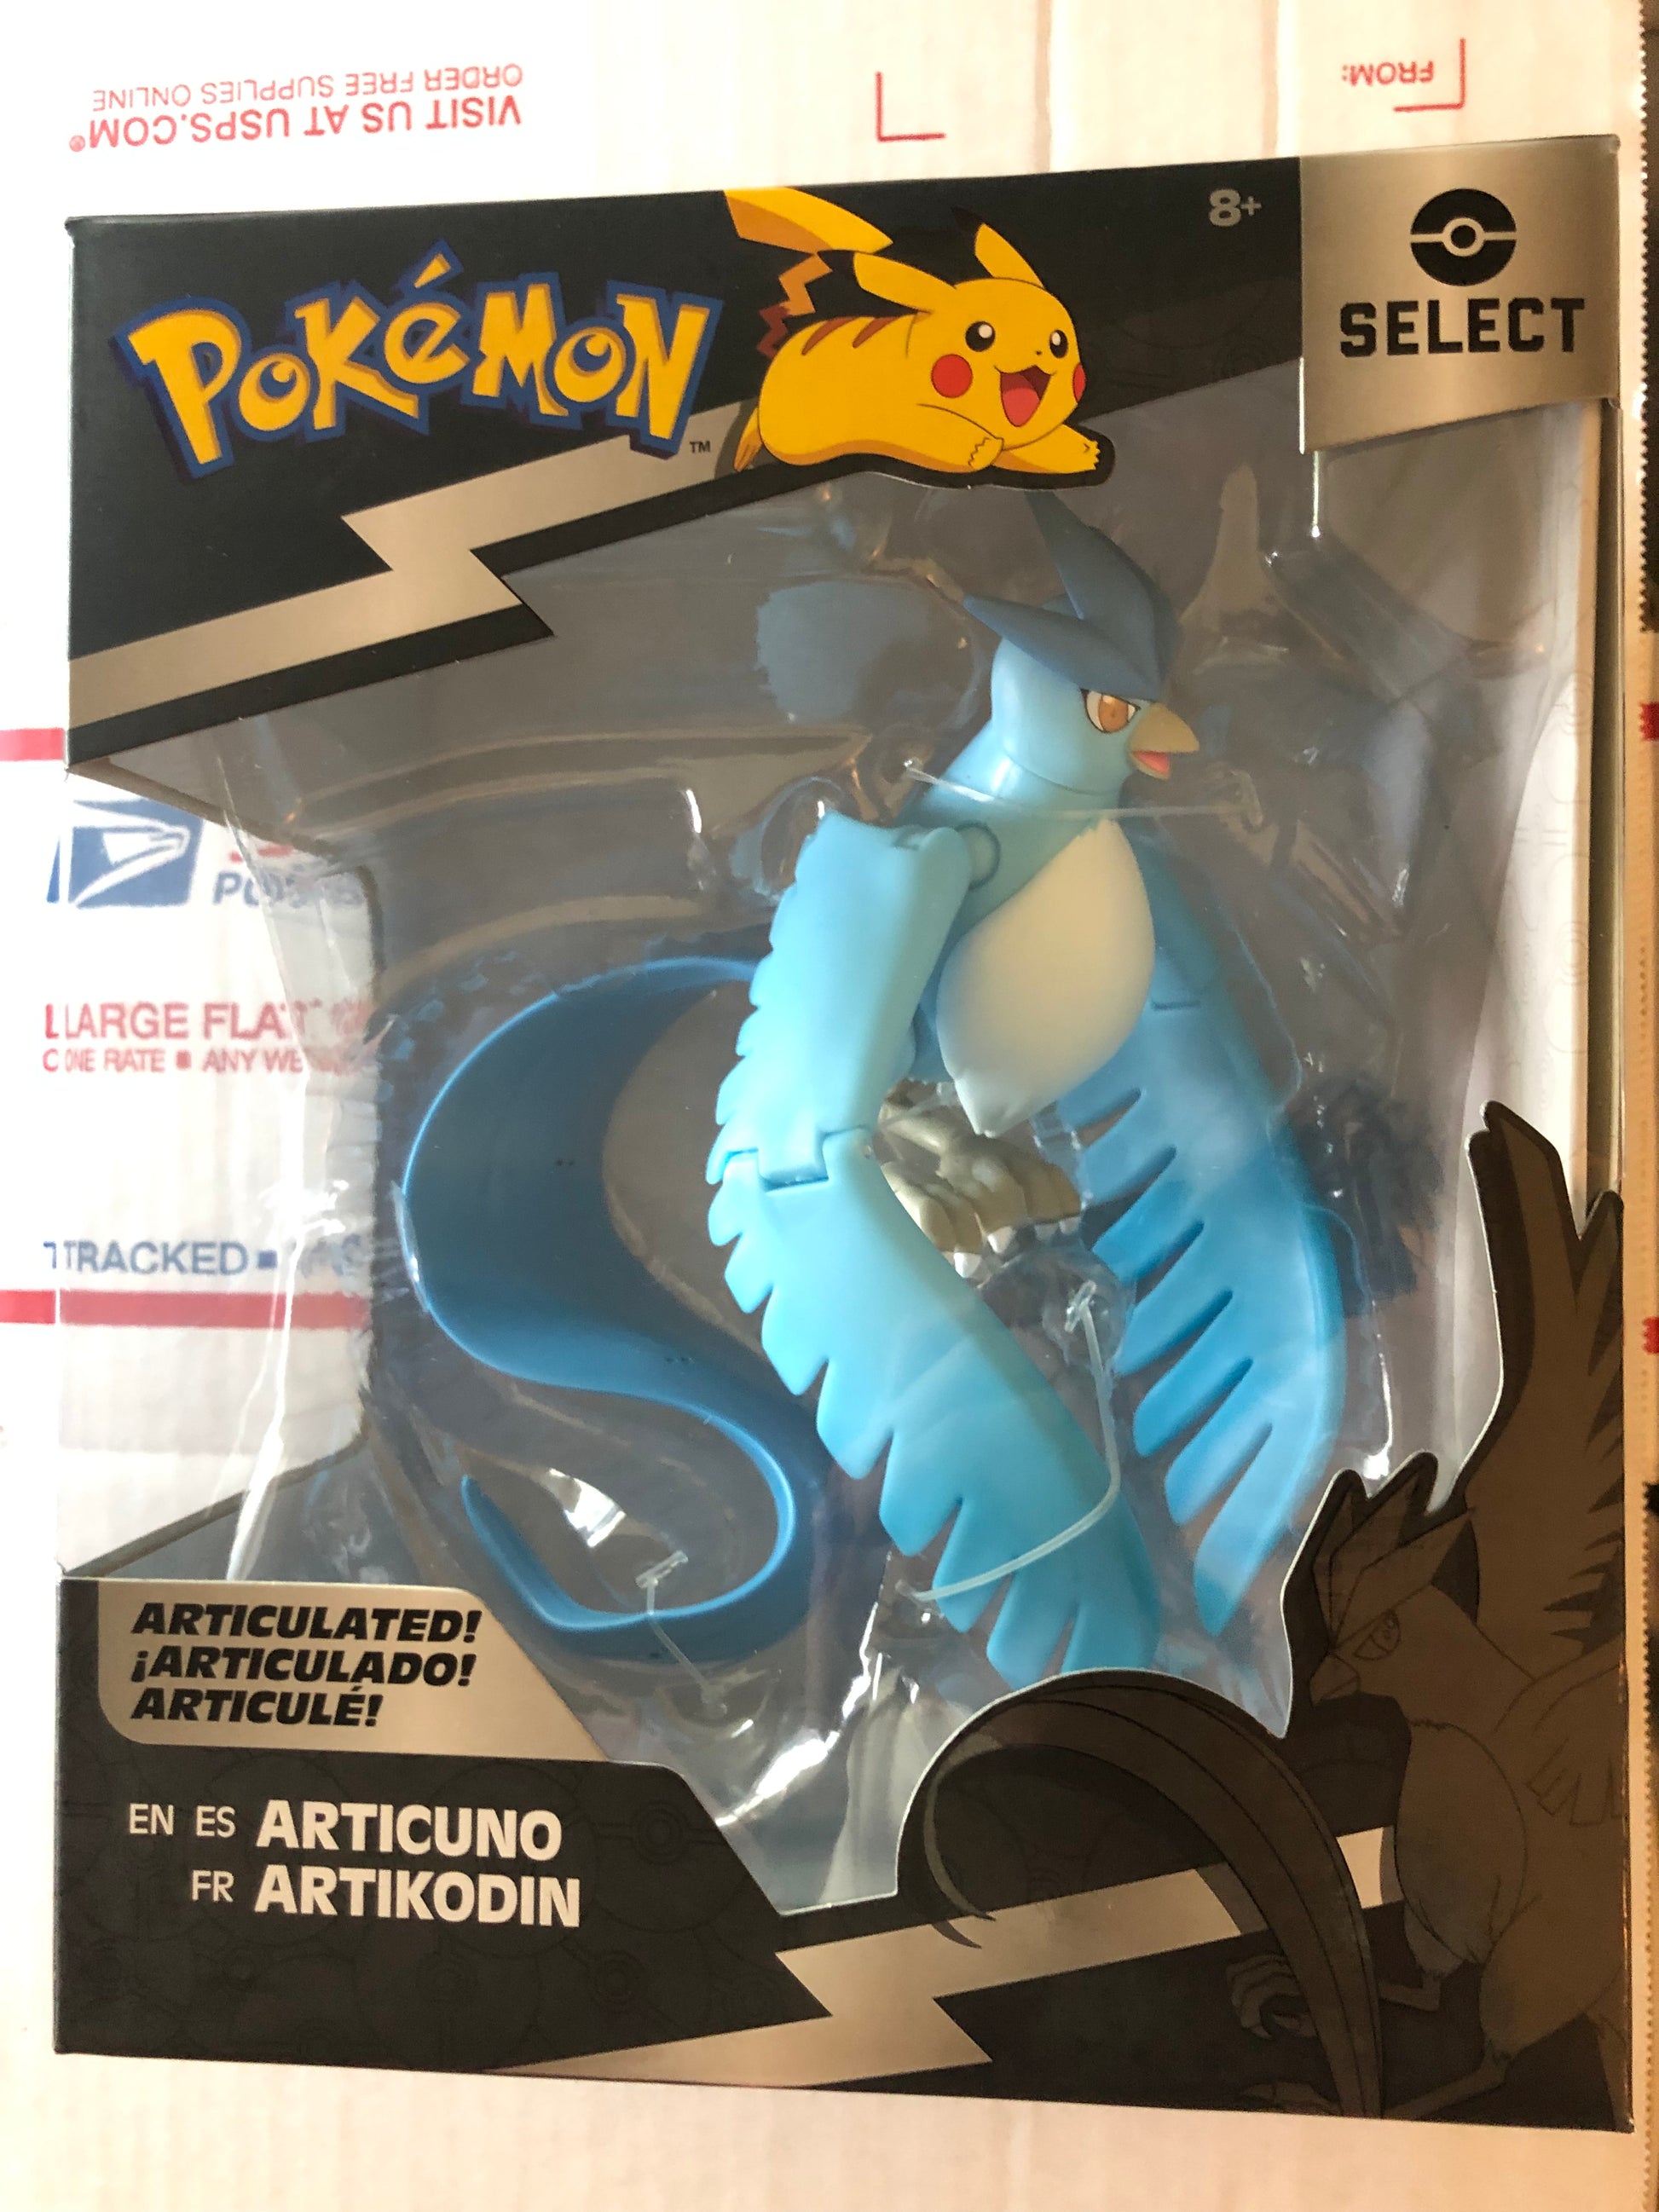  Pokémon Pokemon Articuno, Super-Articulated 6-Inch